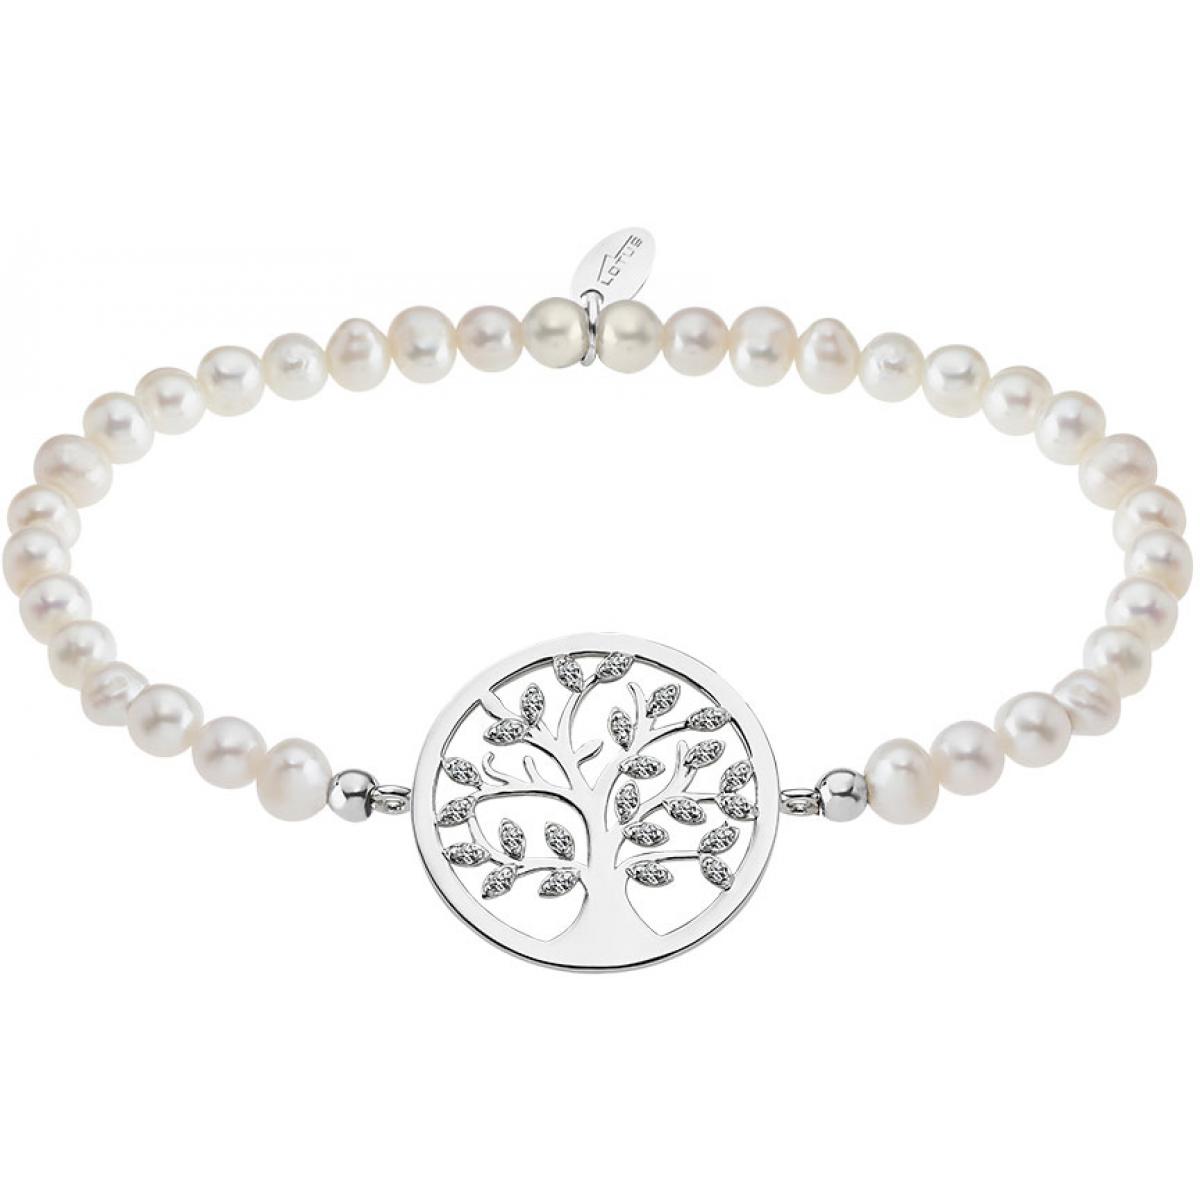 Promo : Bracelet Lotus Silver TREE OF LIFE LP1892-2-1 - Bracelet TREE OF LIFE Argent Femme